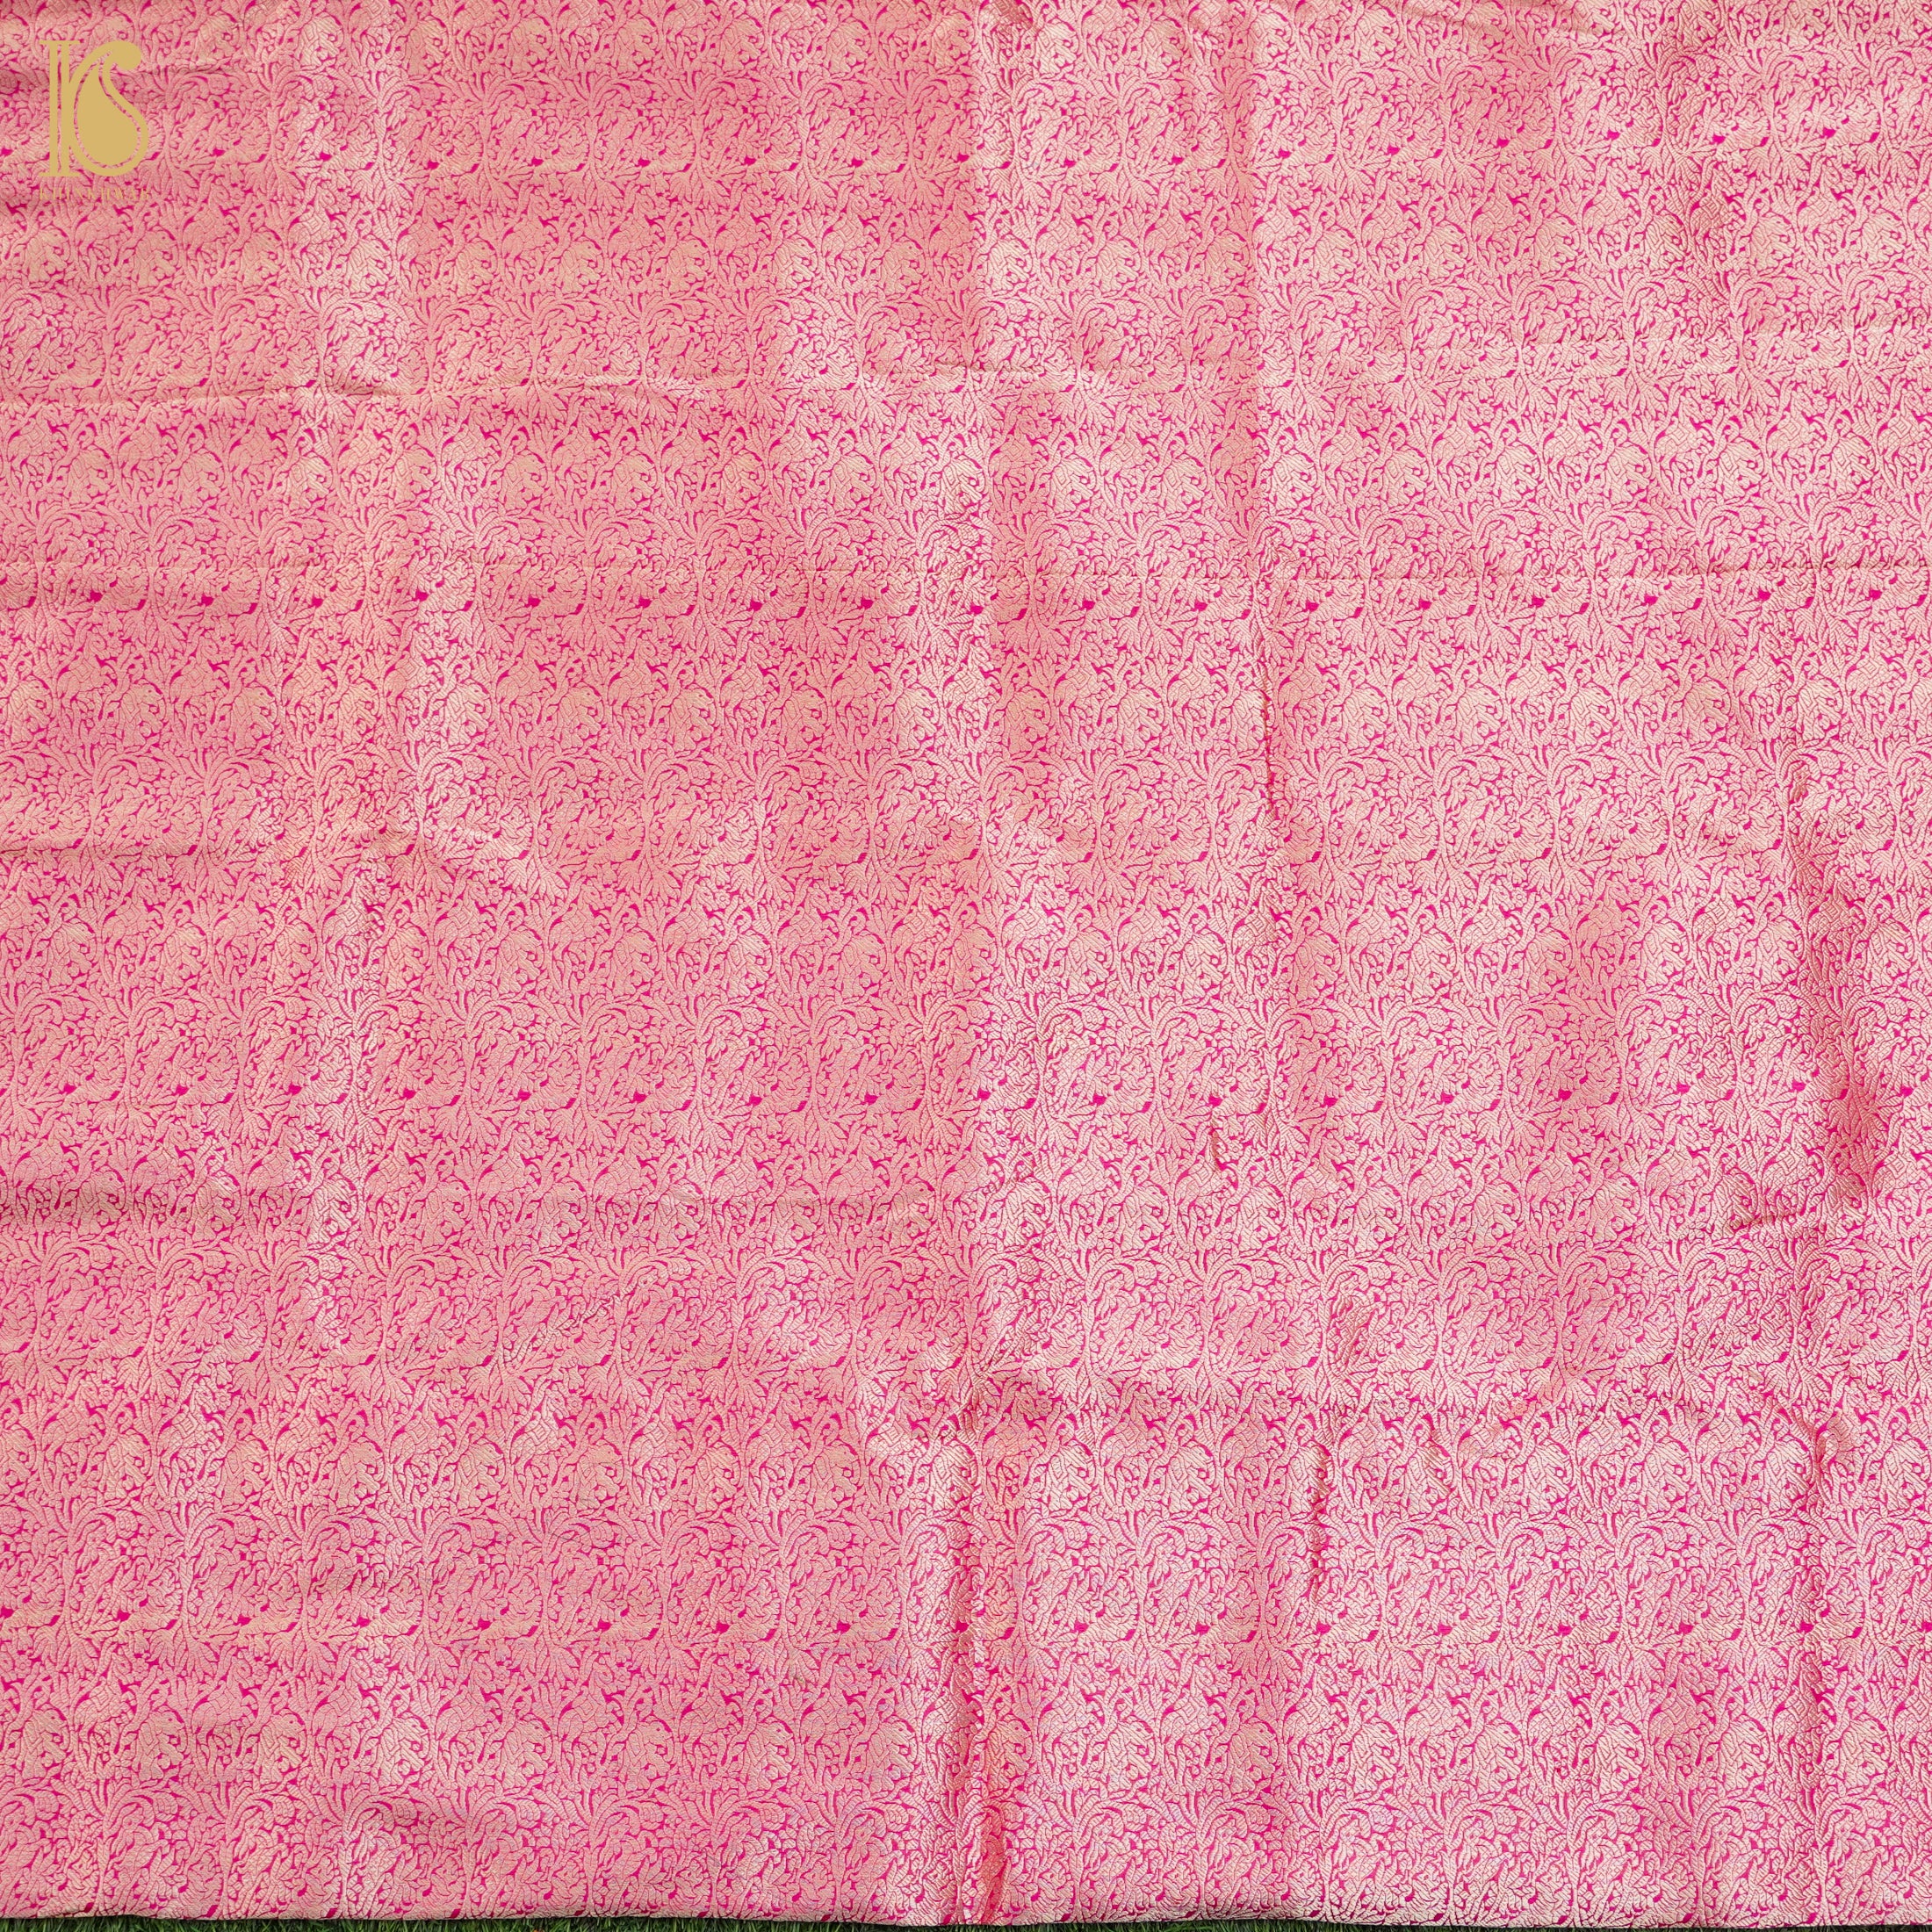 Handloom Razzmatazz Pink Pure Brocade Banarasi Fabric - Khinkhwab